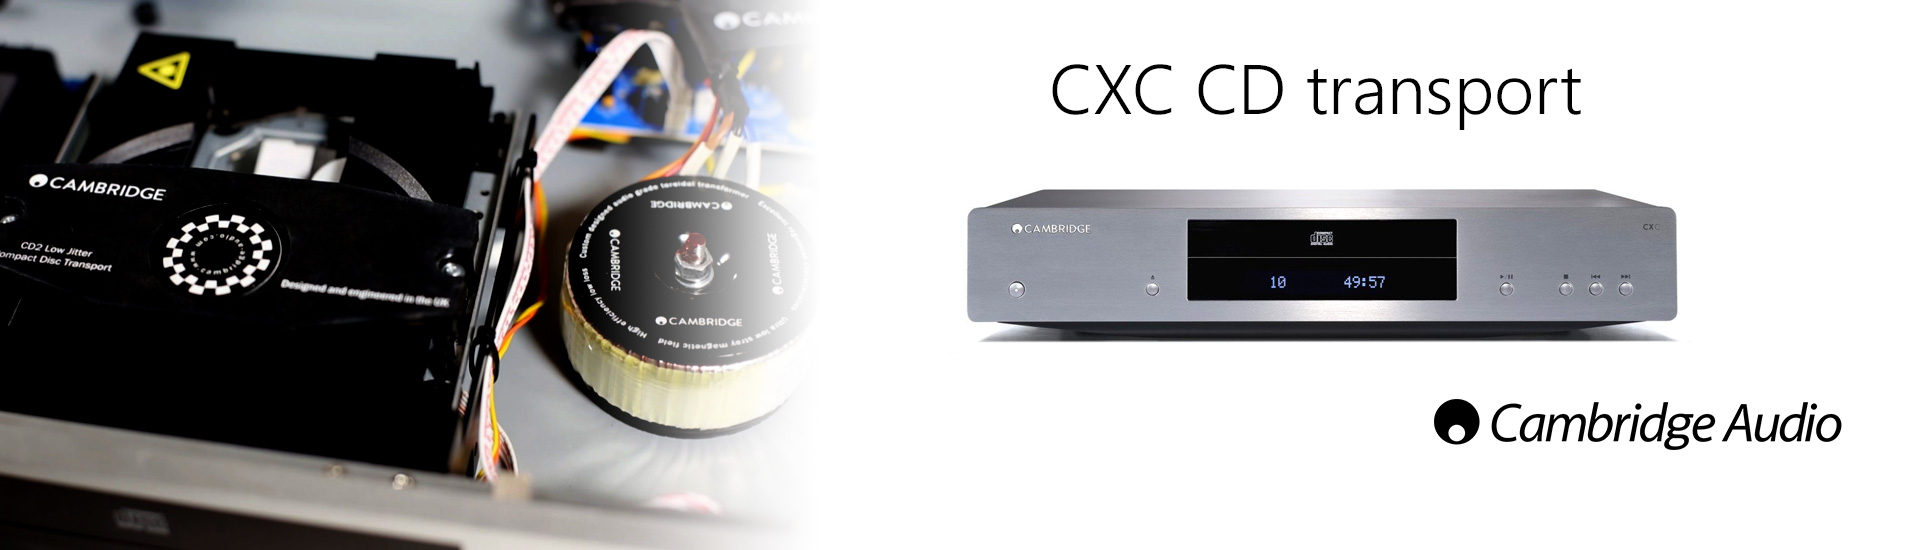 Cambridge Audio CXC